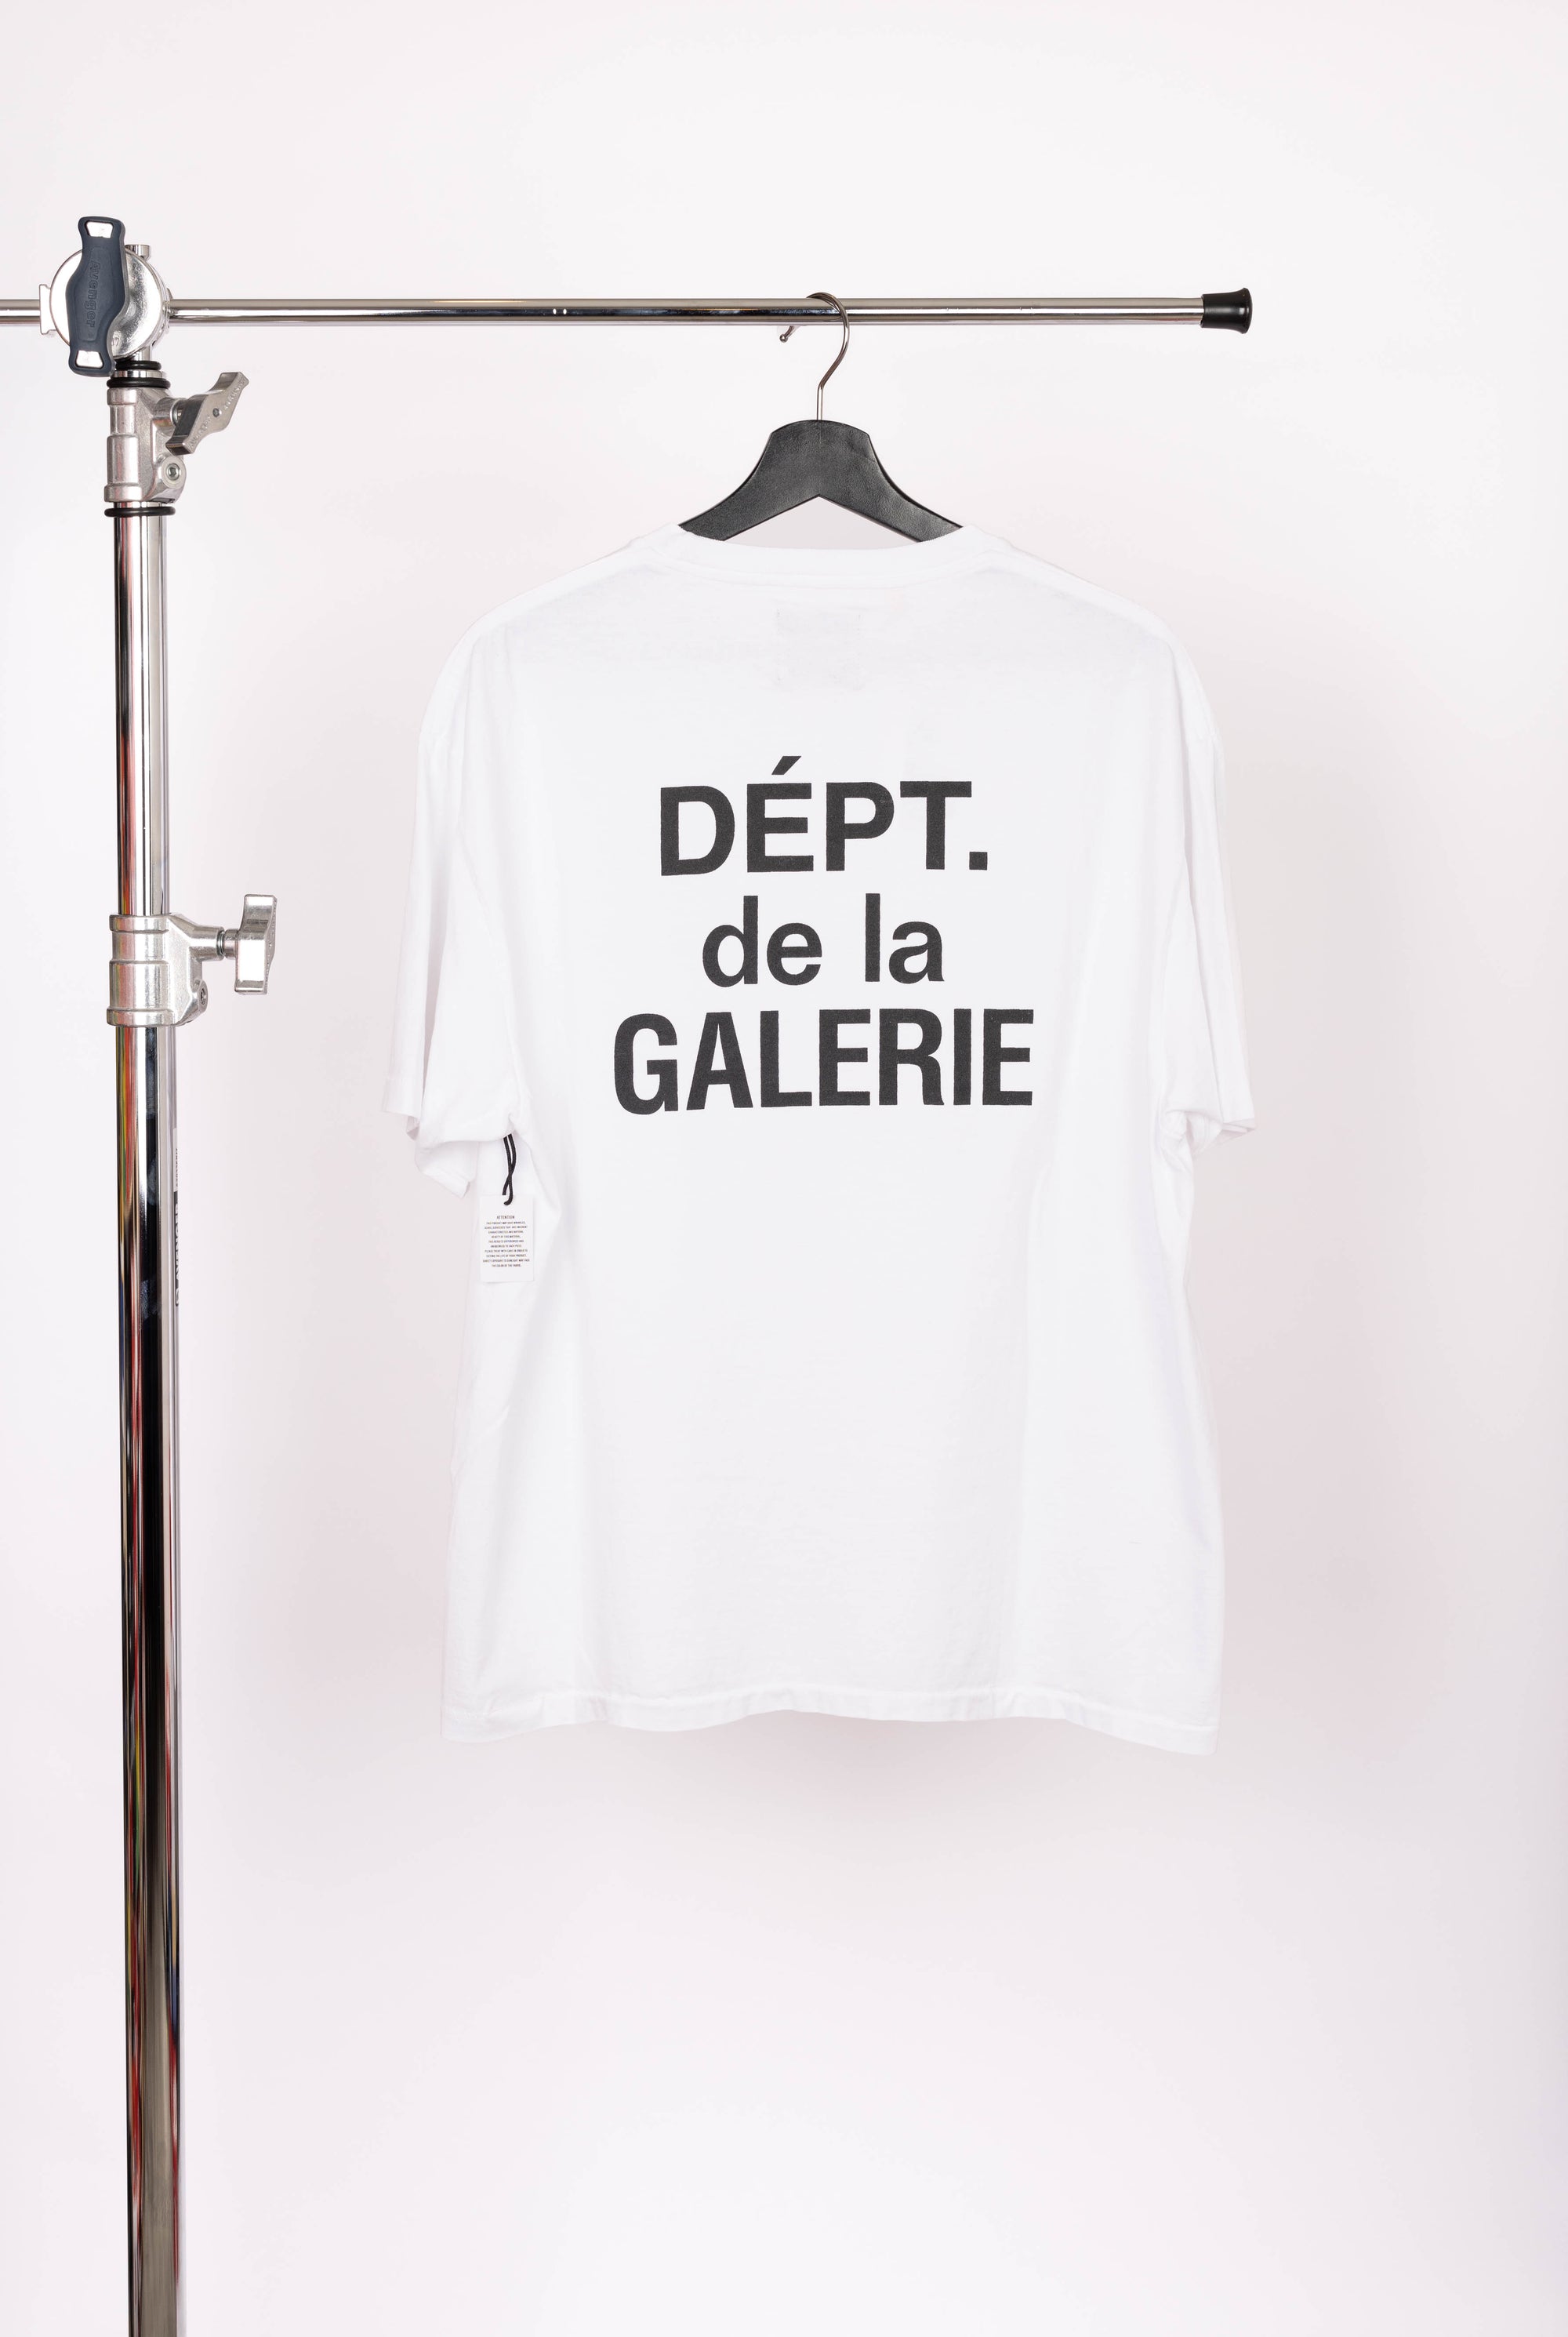 Gallery Dept. French T-shirt "White/Black"